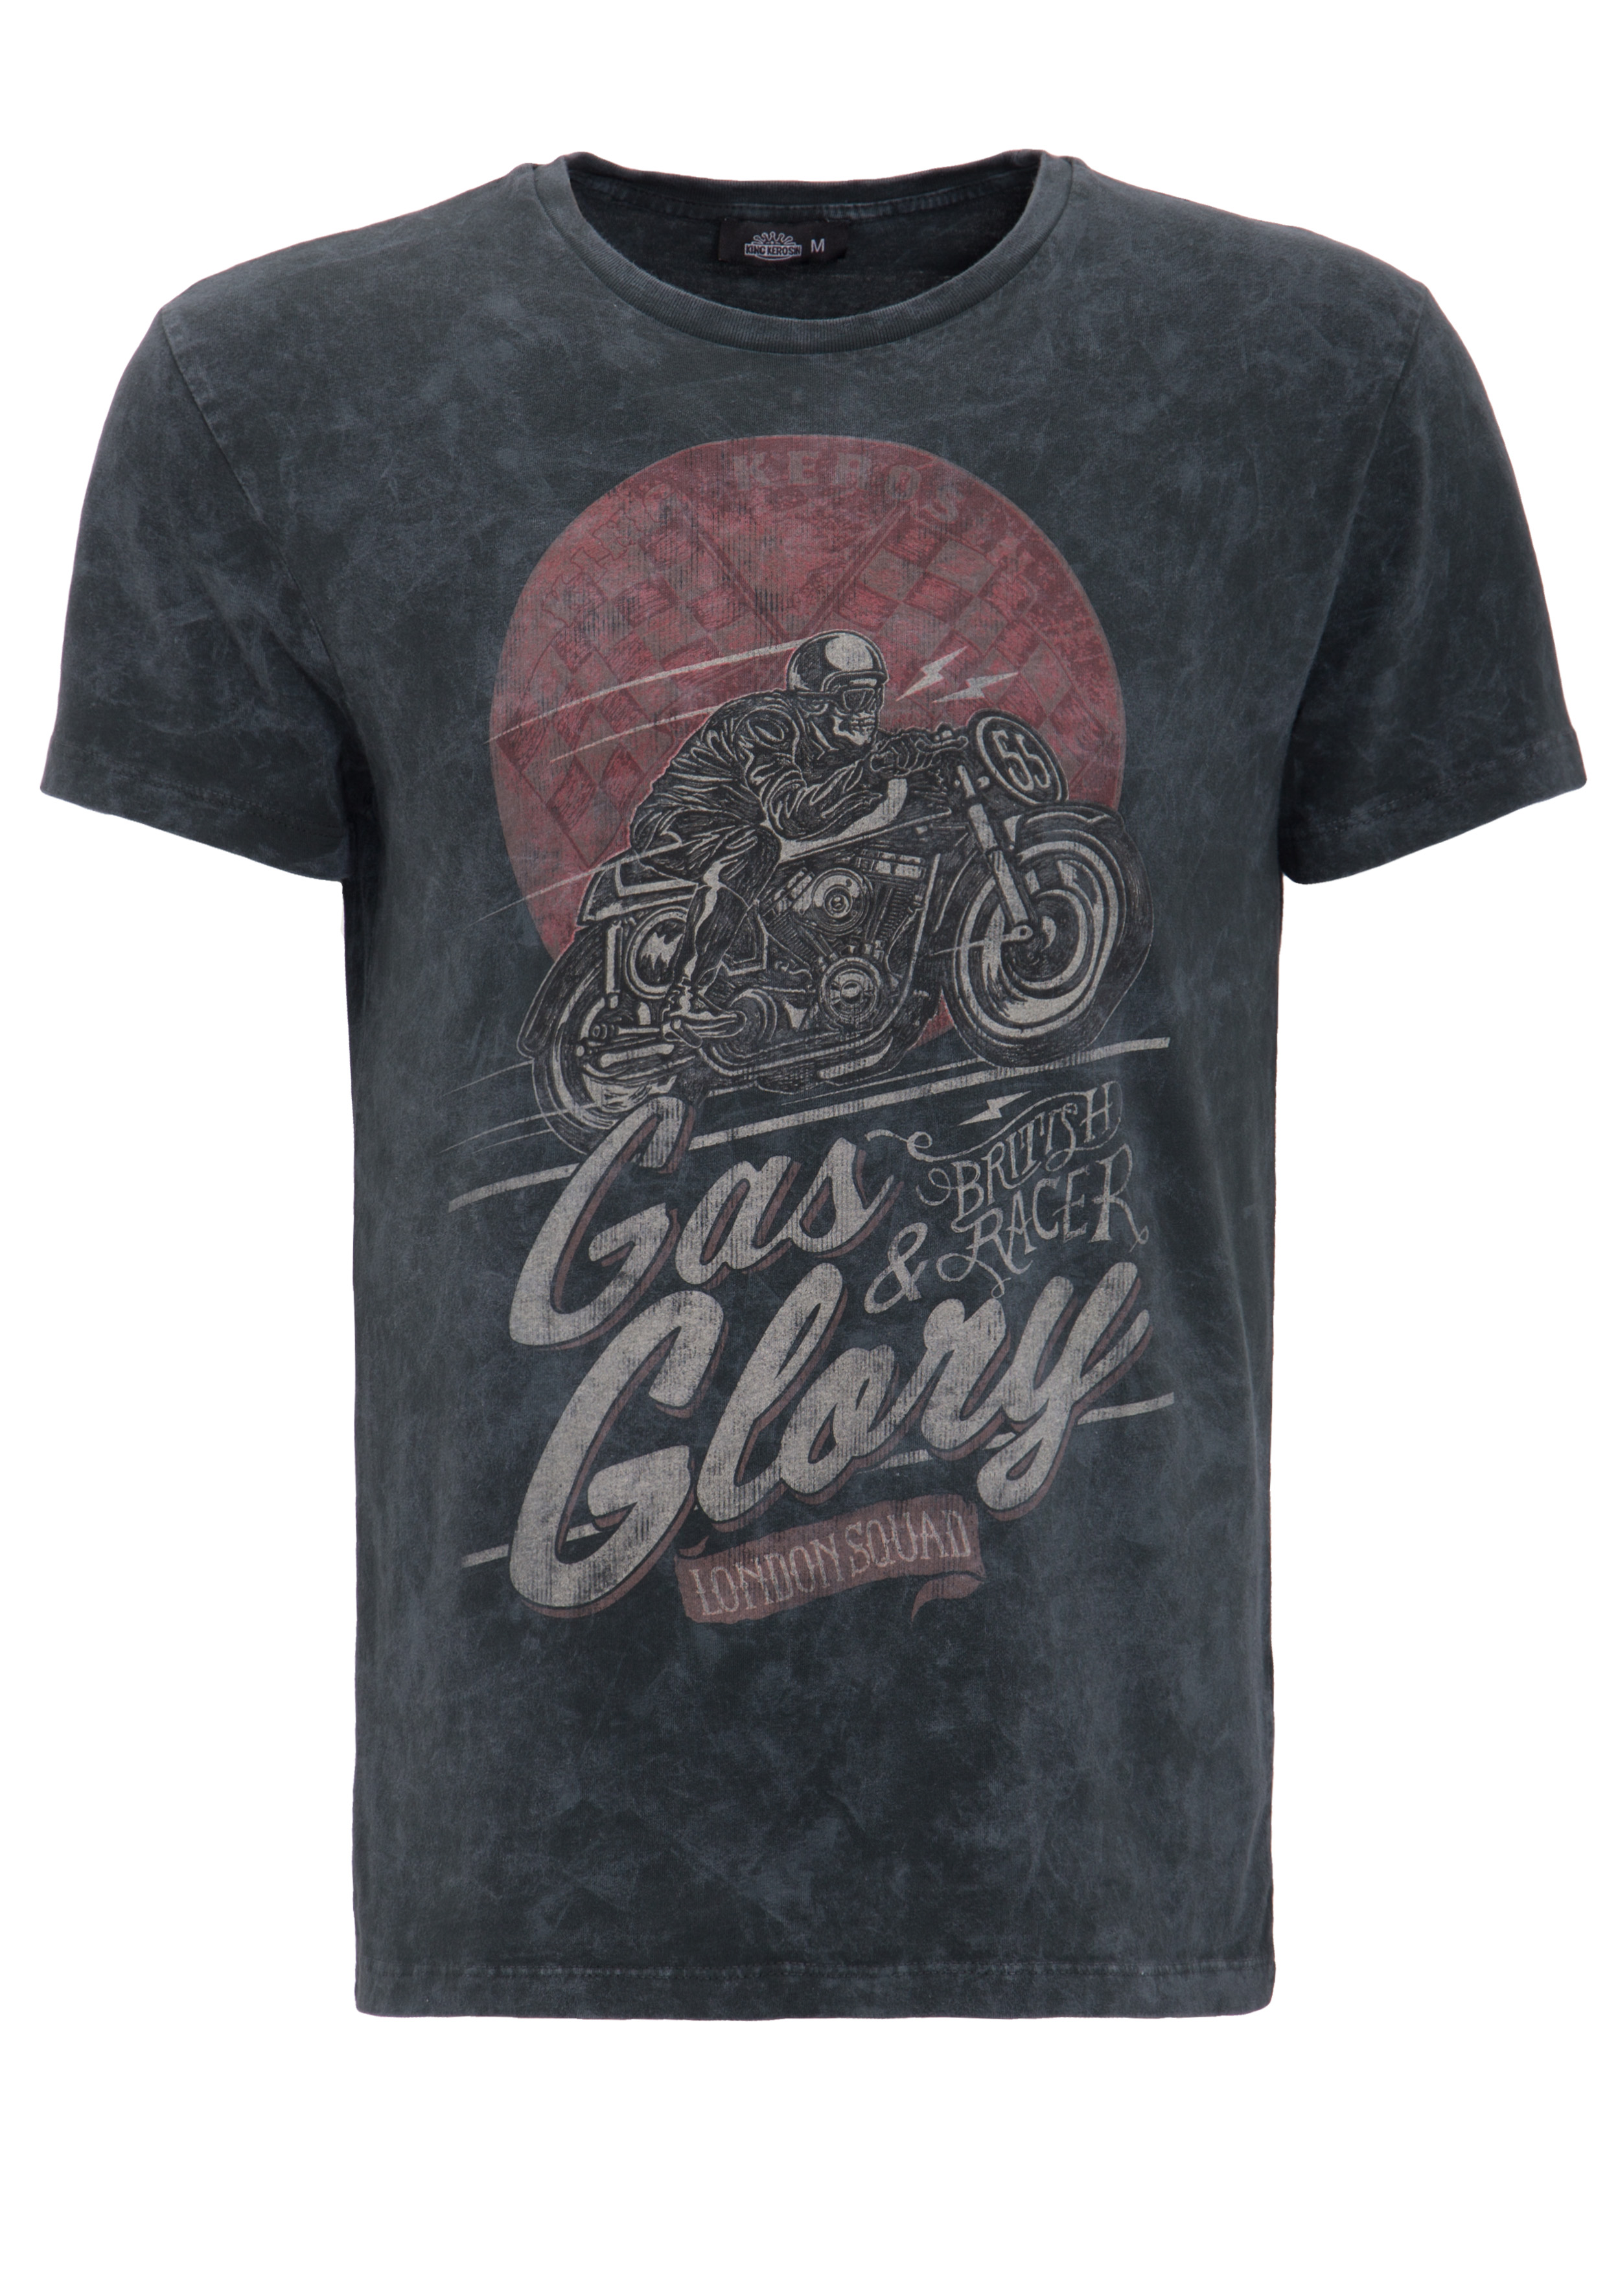 King Kerosin T-Shirt - Gas & Glory - Black XXL